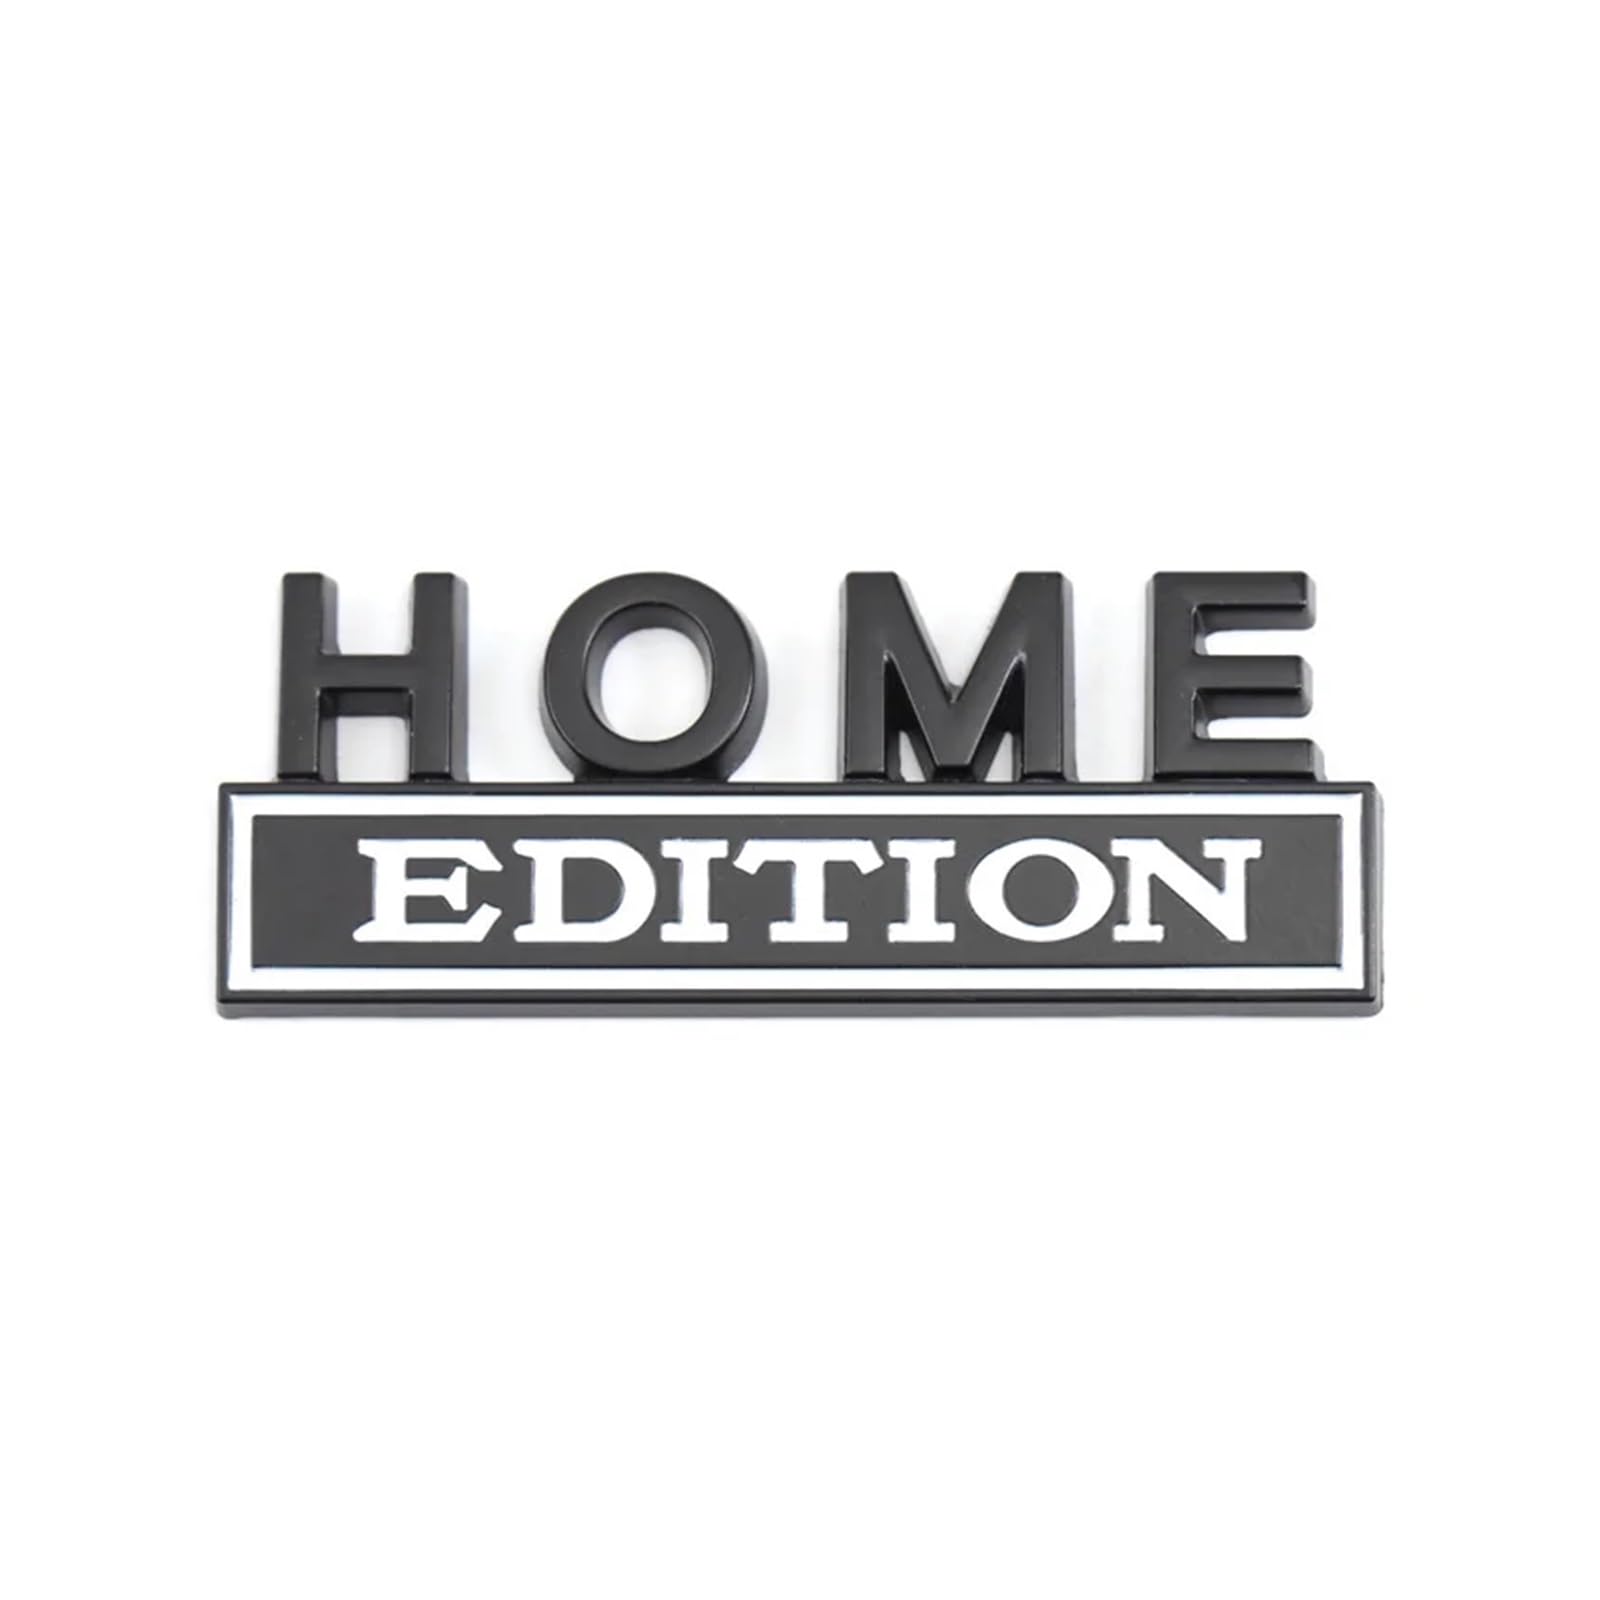 AQXYWQOL 3D Home Logo Edition Emblem Aufkleber kompatibel mit Compass Patriot Renegade F150 F250 F350 1500 2500 3500 Farbe ist konstant, verblasst nicht und beschädigt(Home Sticker-01) von AQXYWQOL